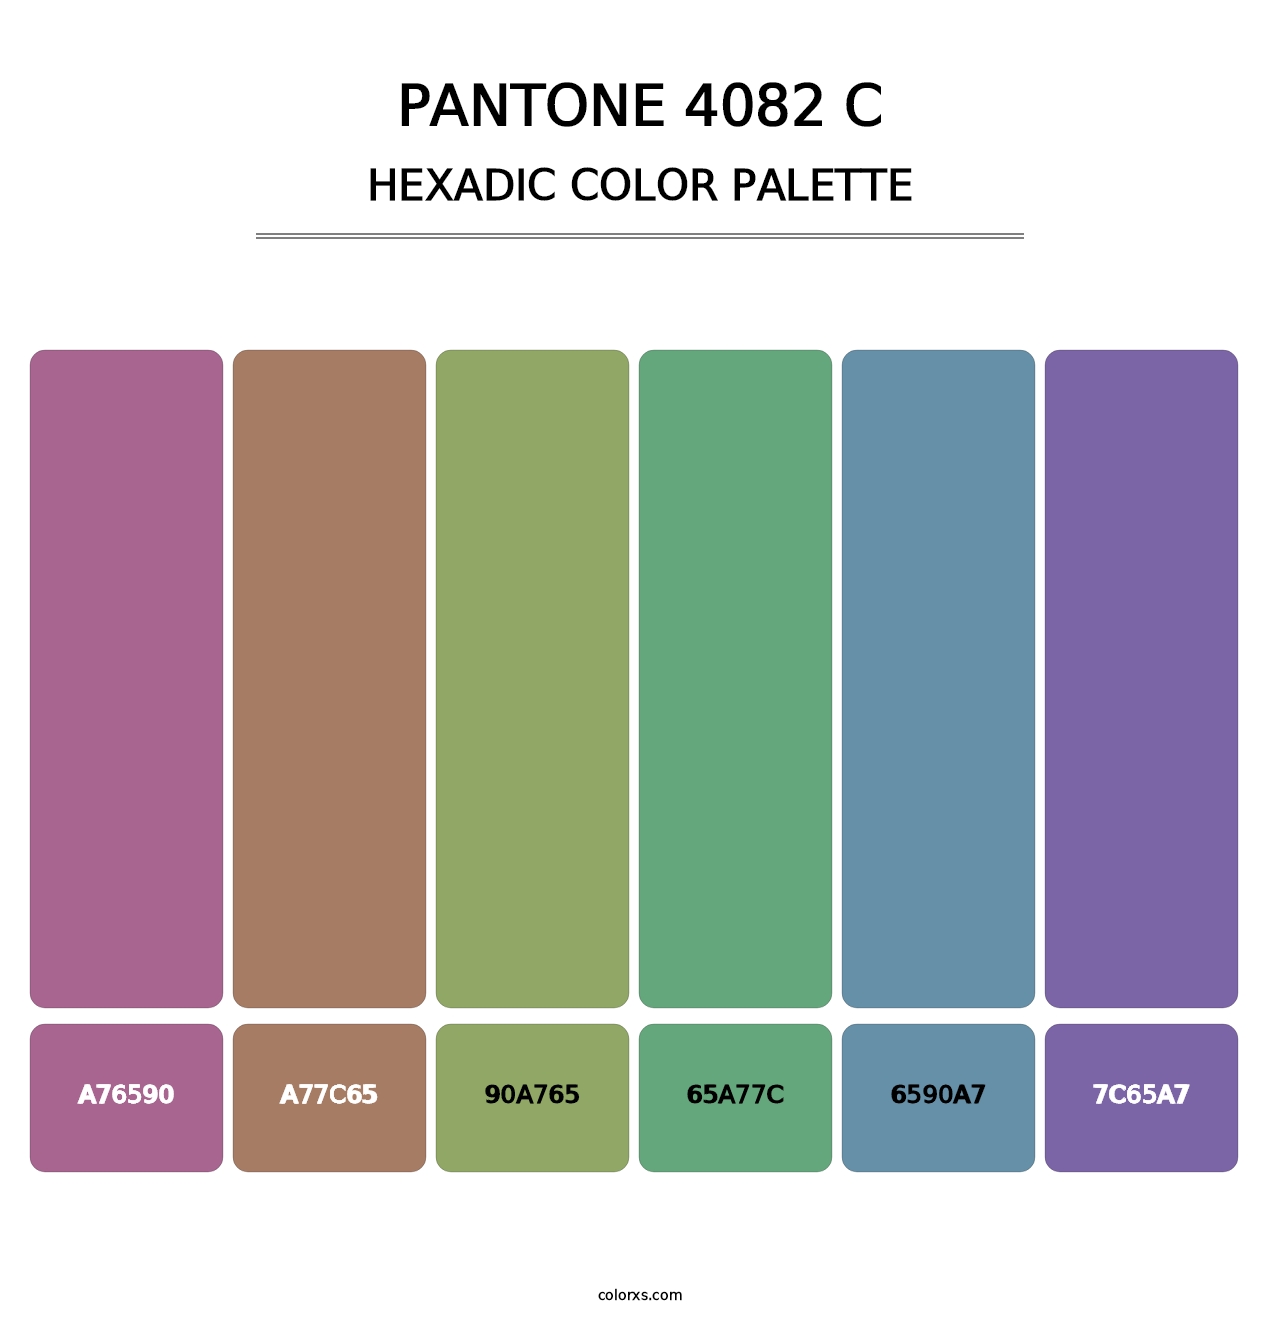 PANTONE 4082 C - Hexadic Color Palette